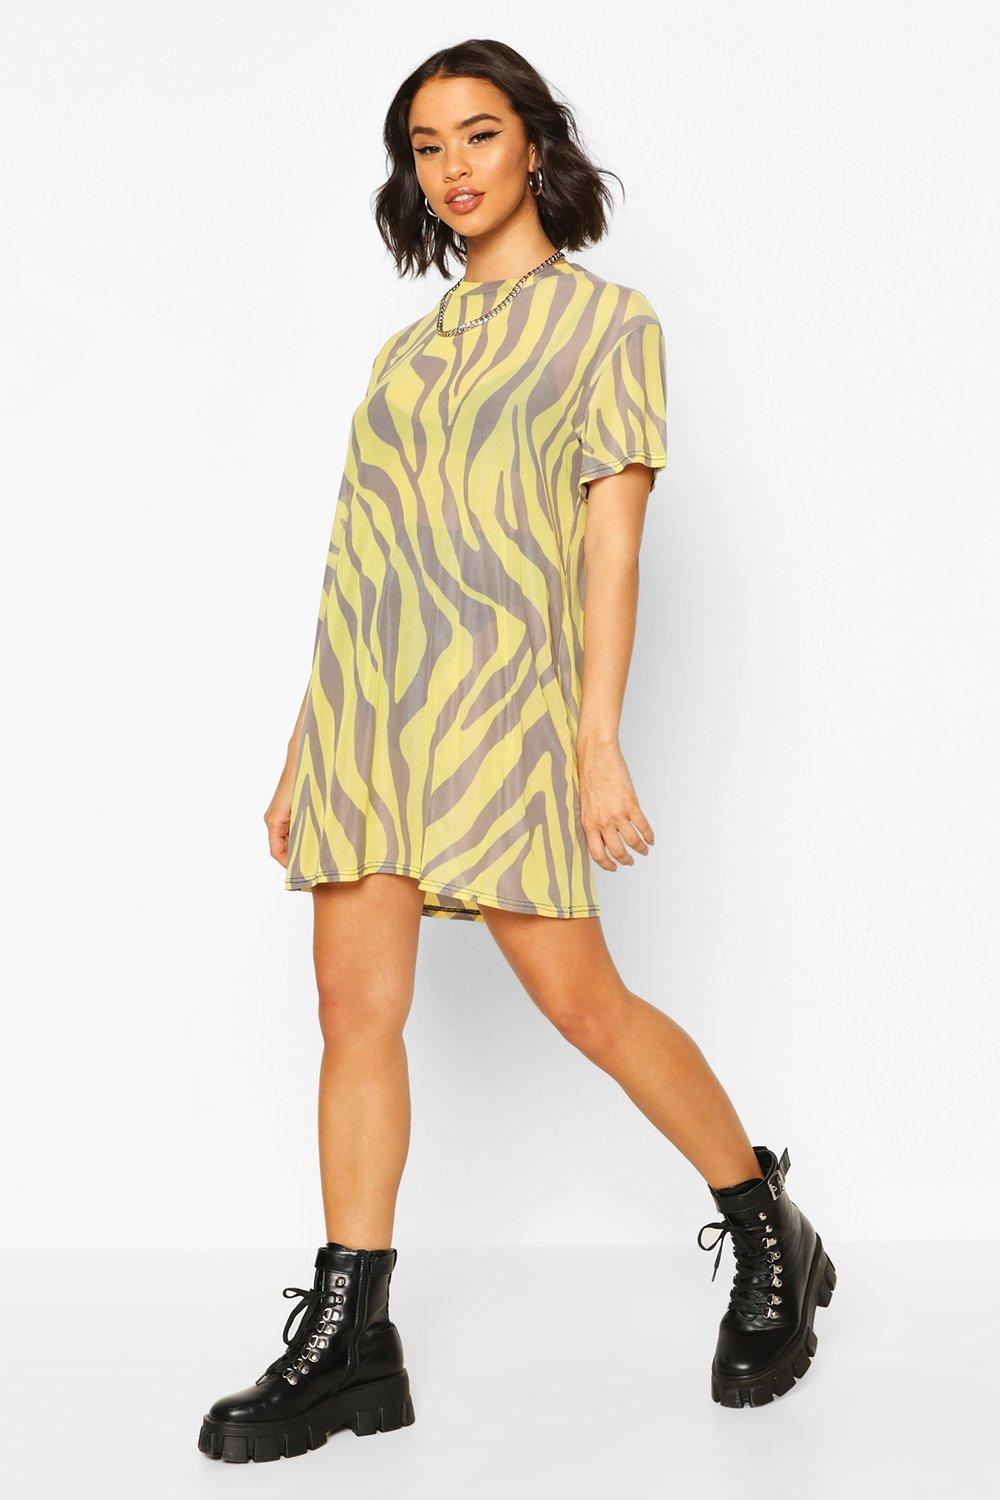 zebra print t shirt dress